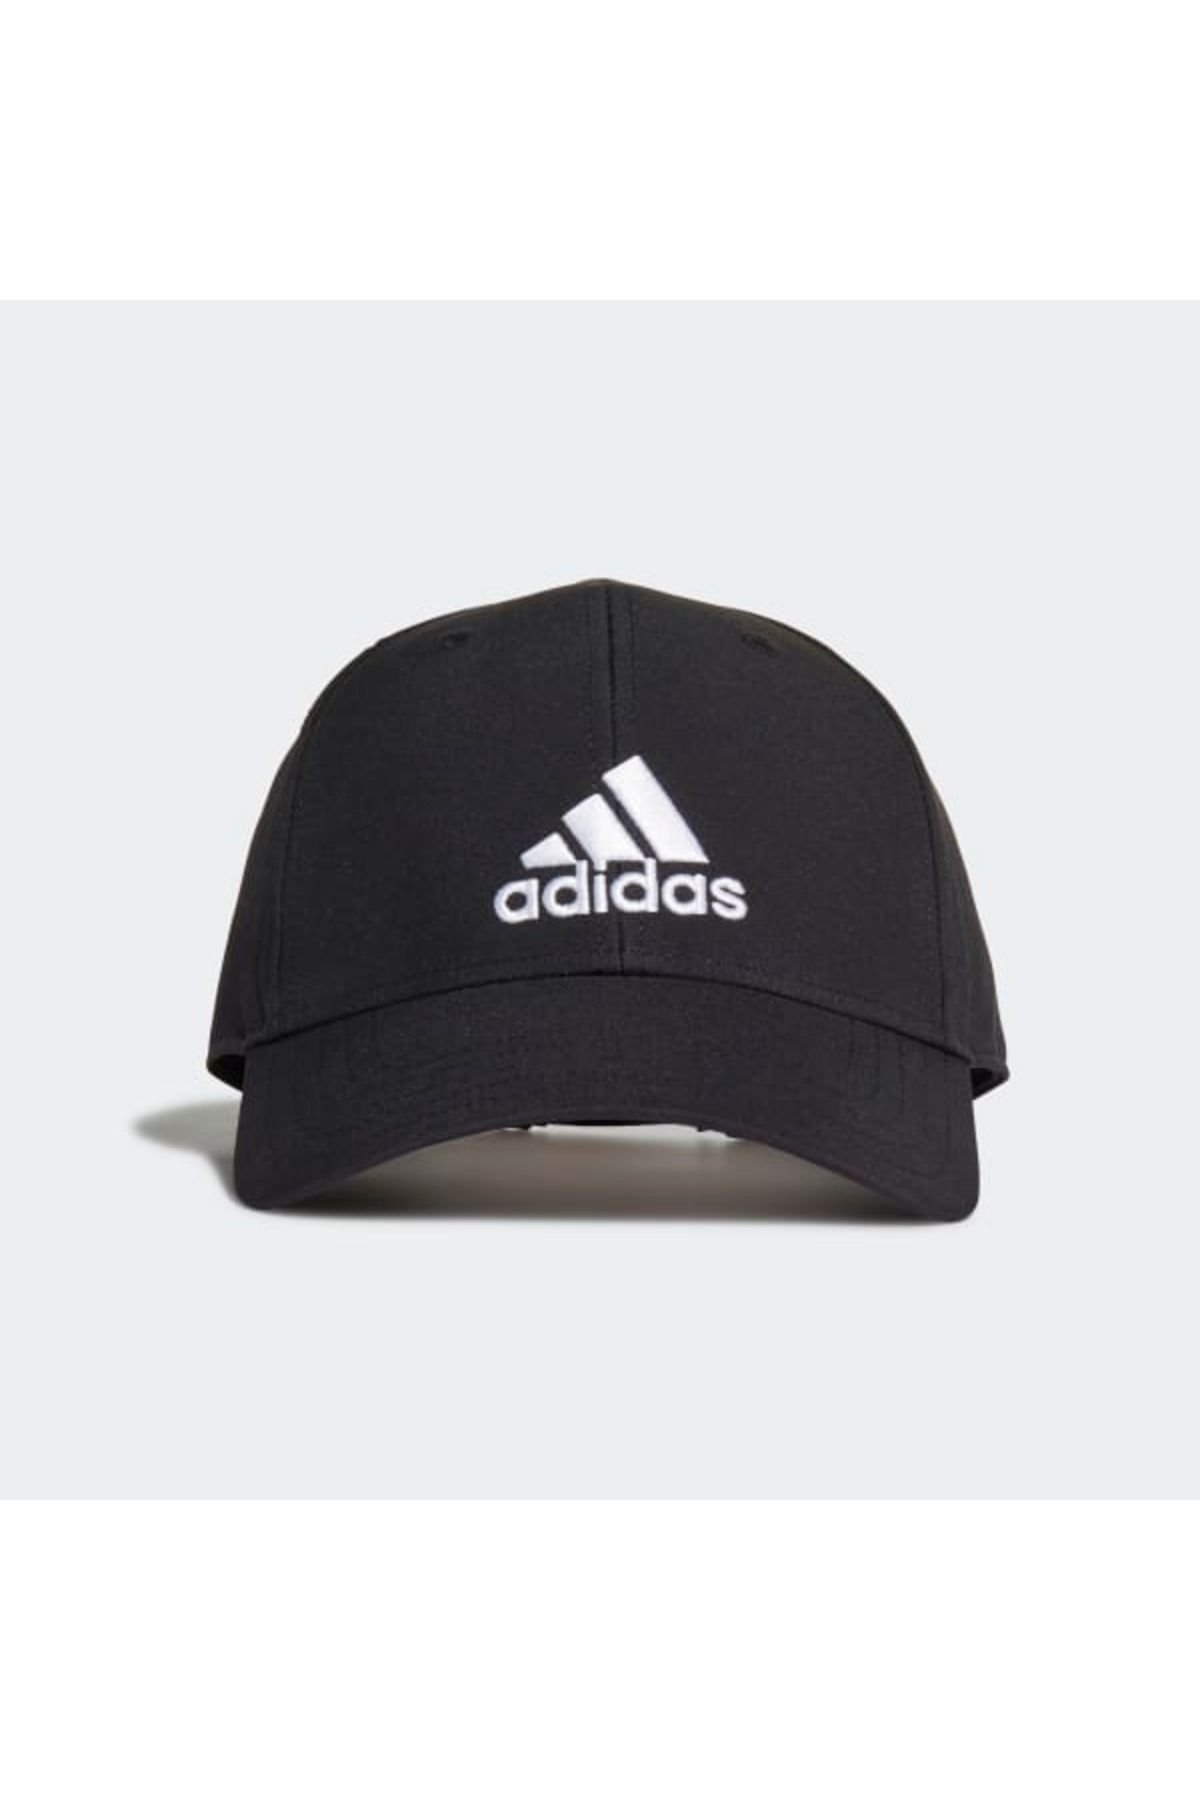 adidas Lightweight Embroidered Siyah Şapka (gm4509)